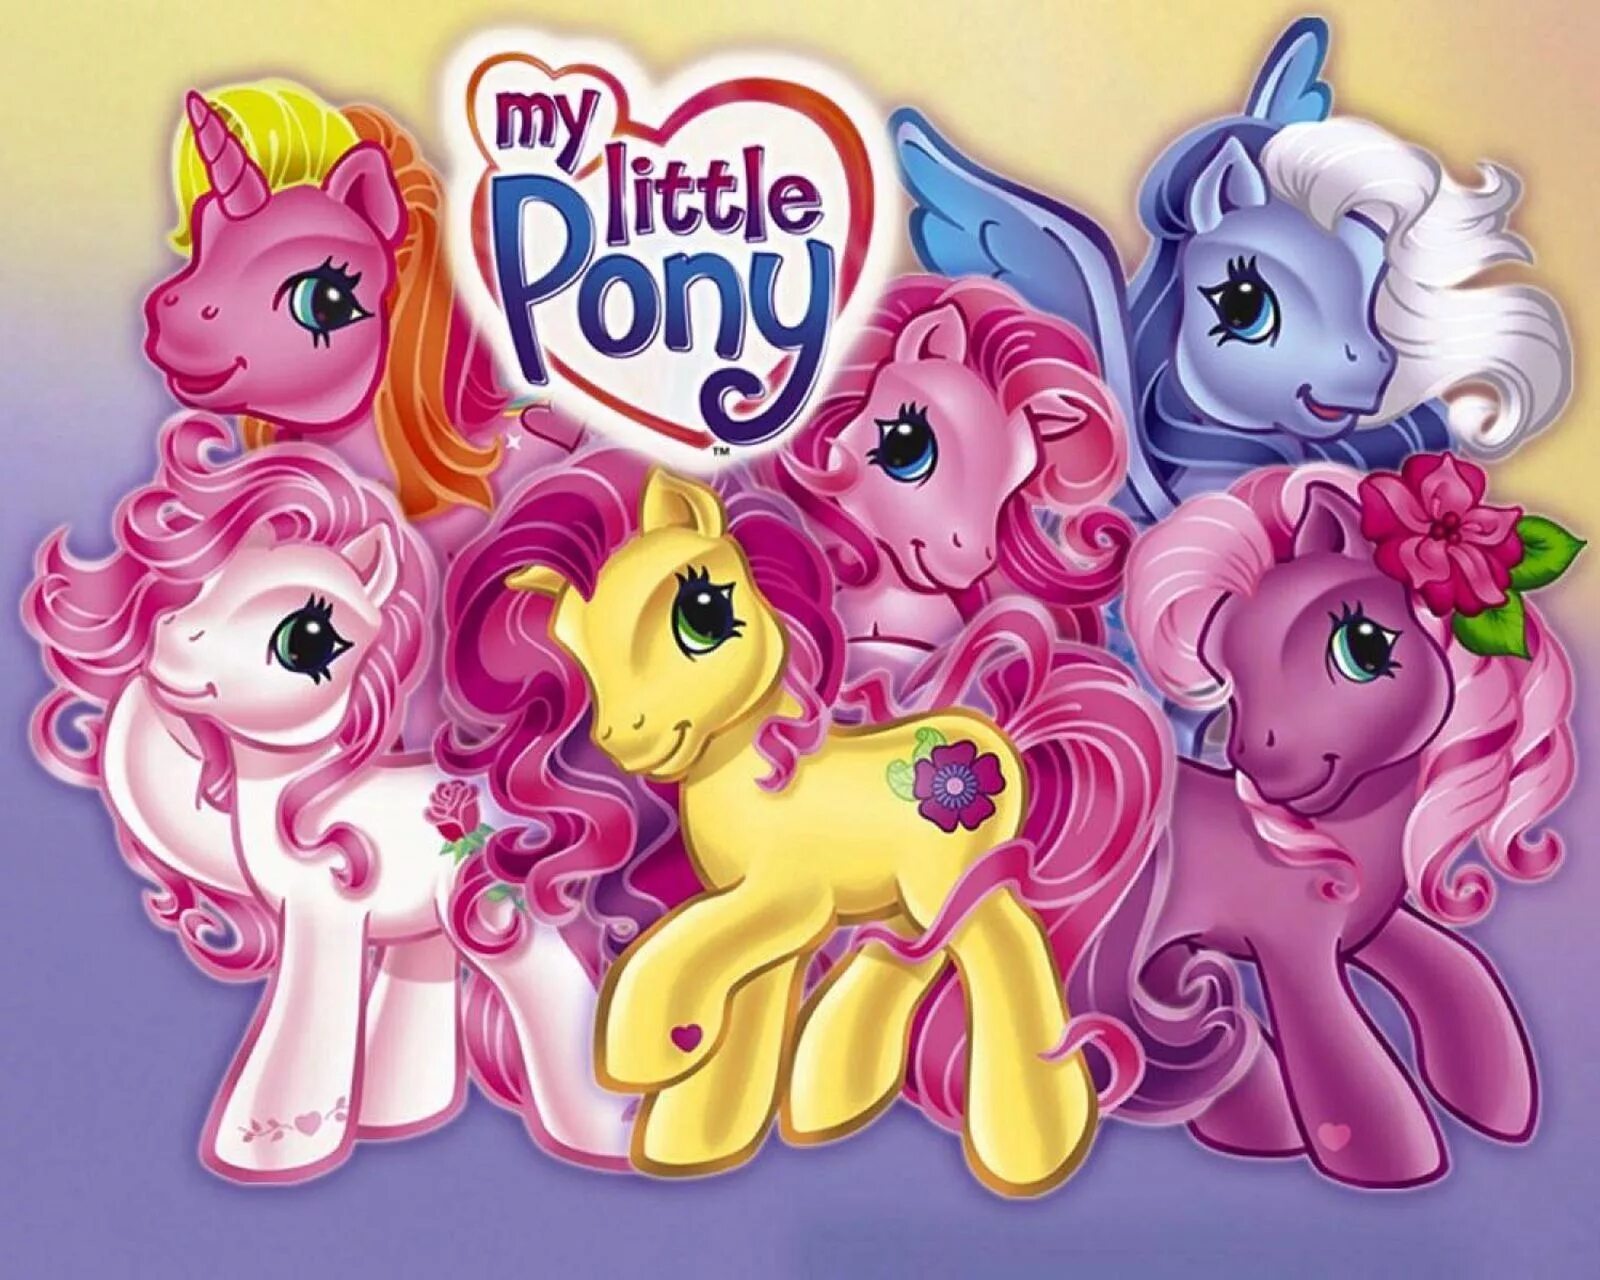 My little pony маленький пони. My little Pony g3. My little Pony Ponyville g3 игрушки.